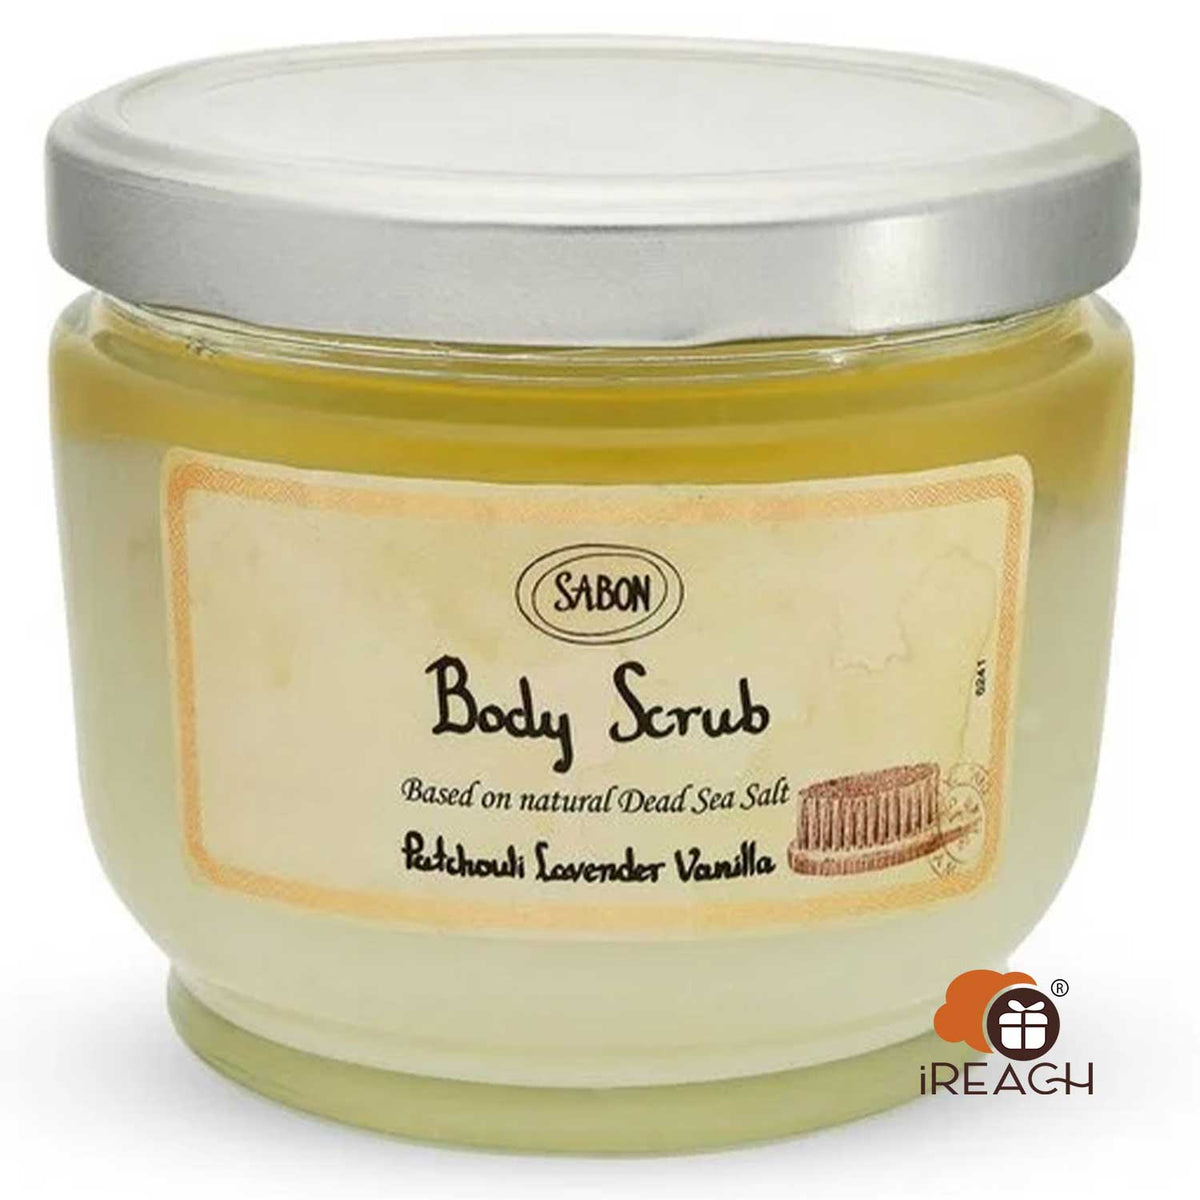 Sabon Patchouli Lavender Vanilla Body Scrub 600g (Includes Wooden Spoon)